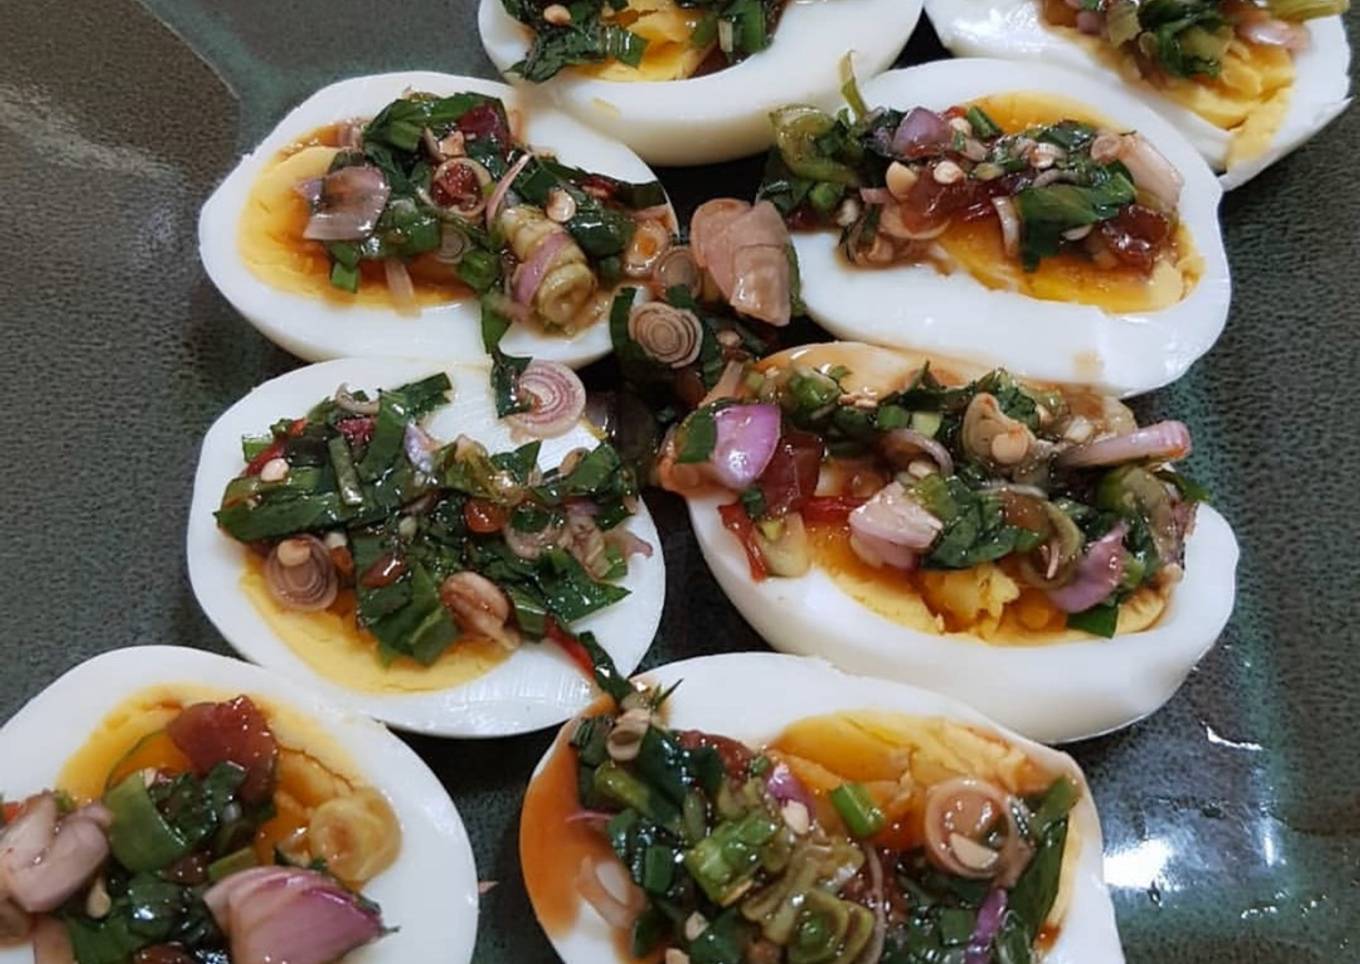 Spicy Egg Salad ala Thailand